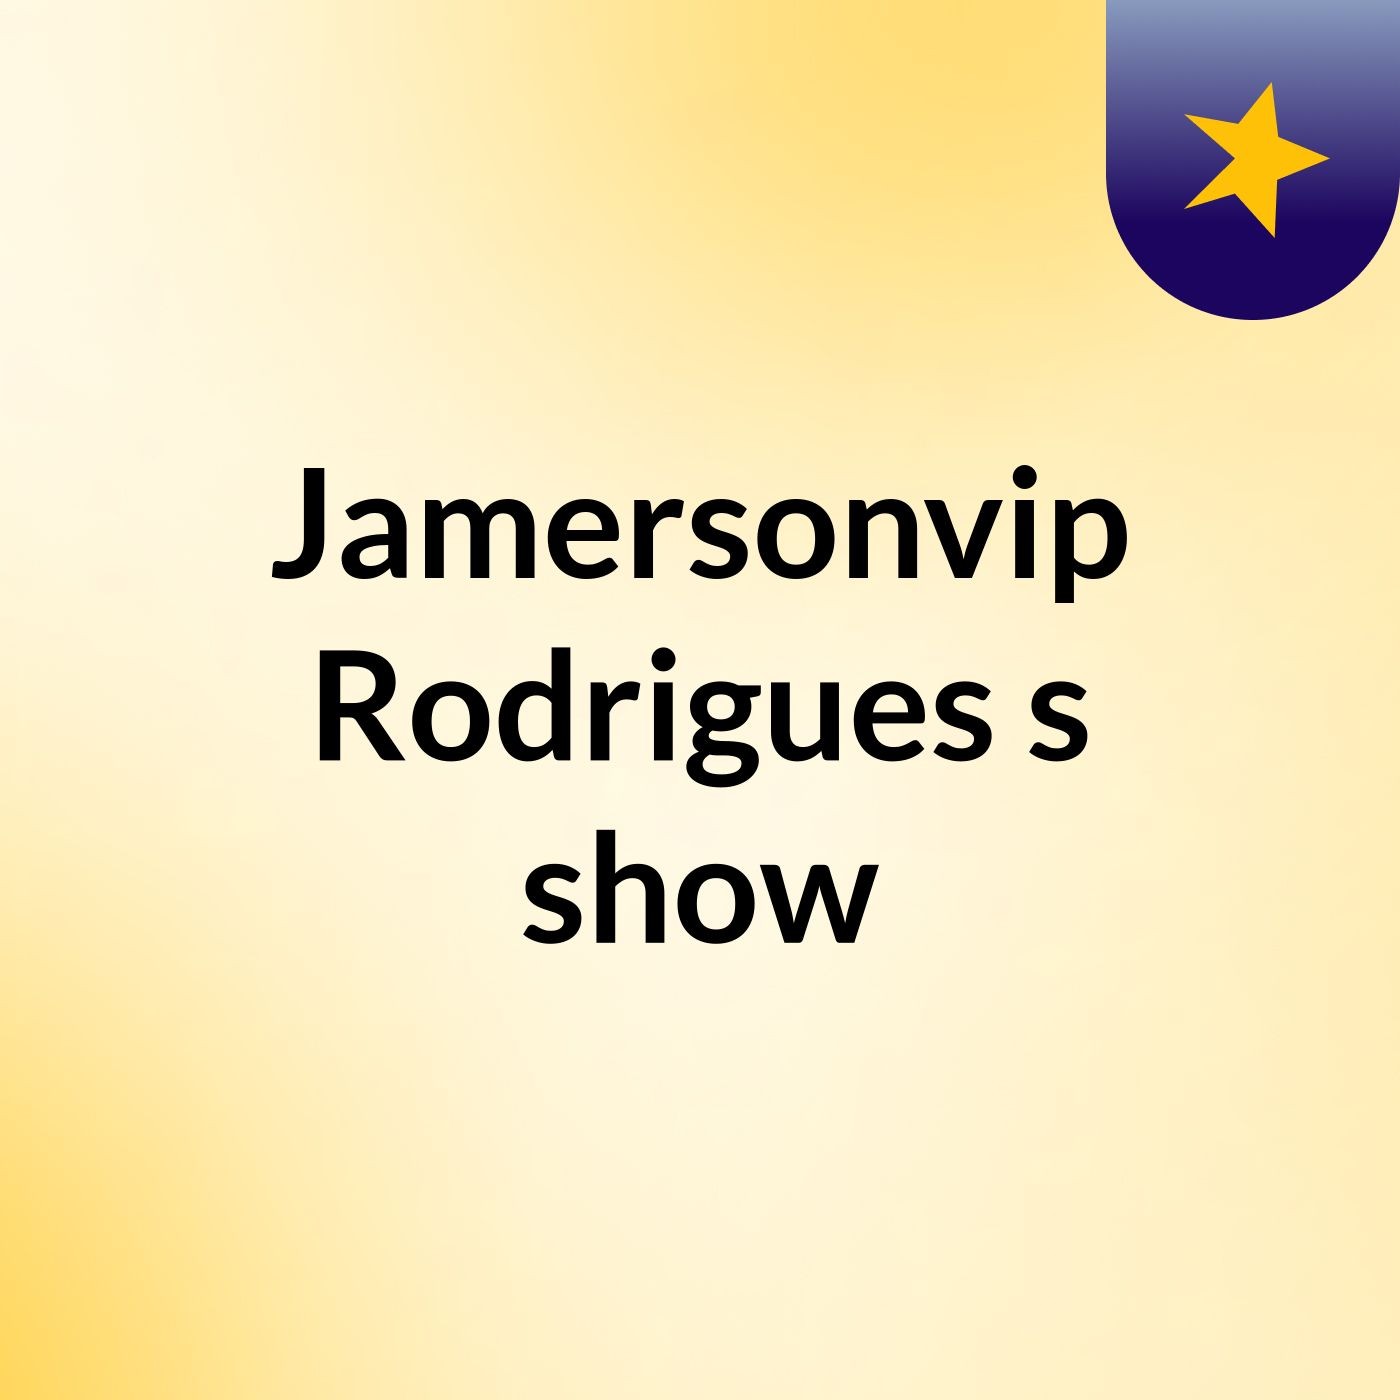 Episódio 9 - Jamersonvip Rodrigues's show